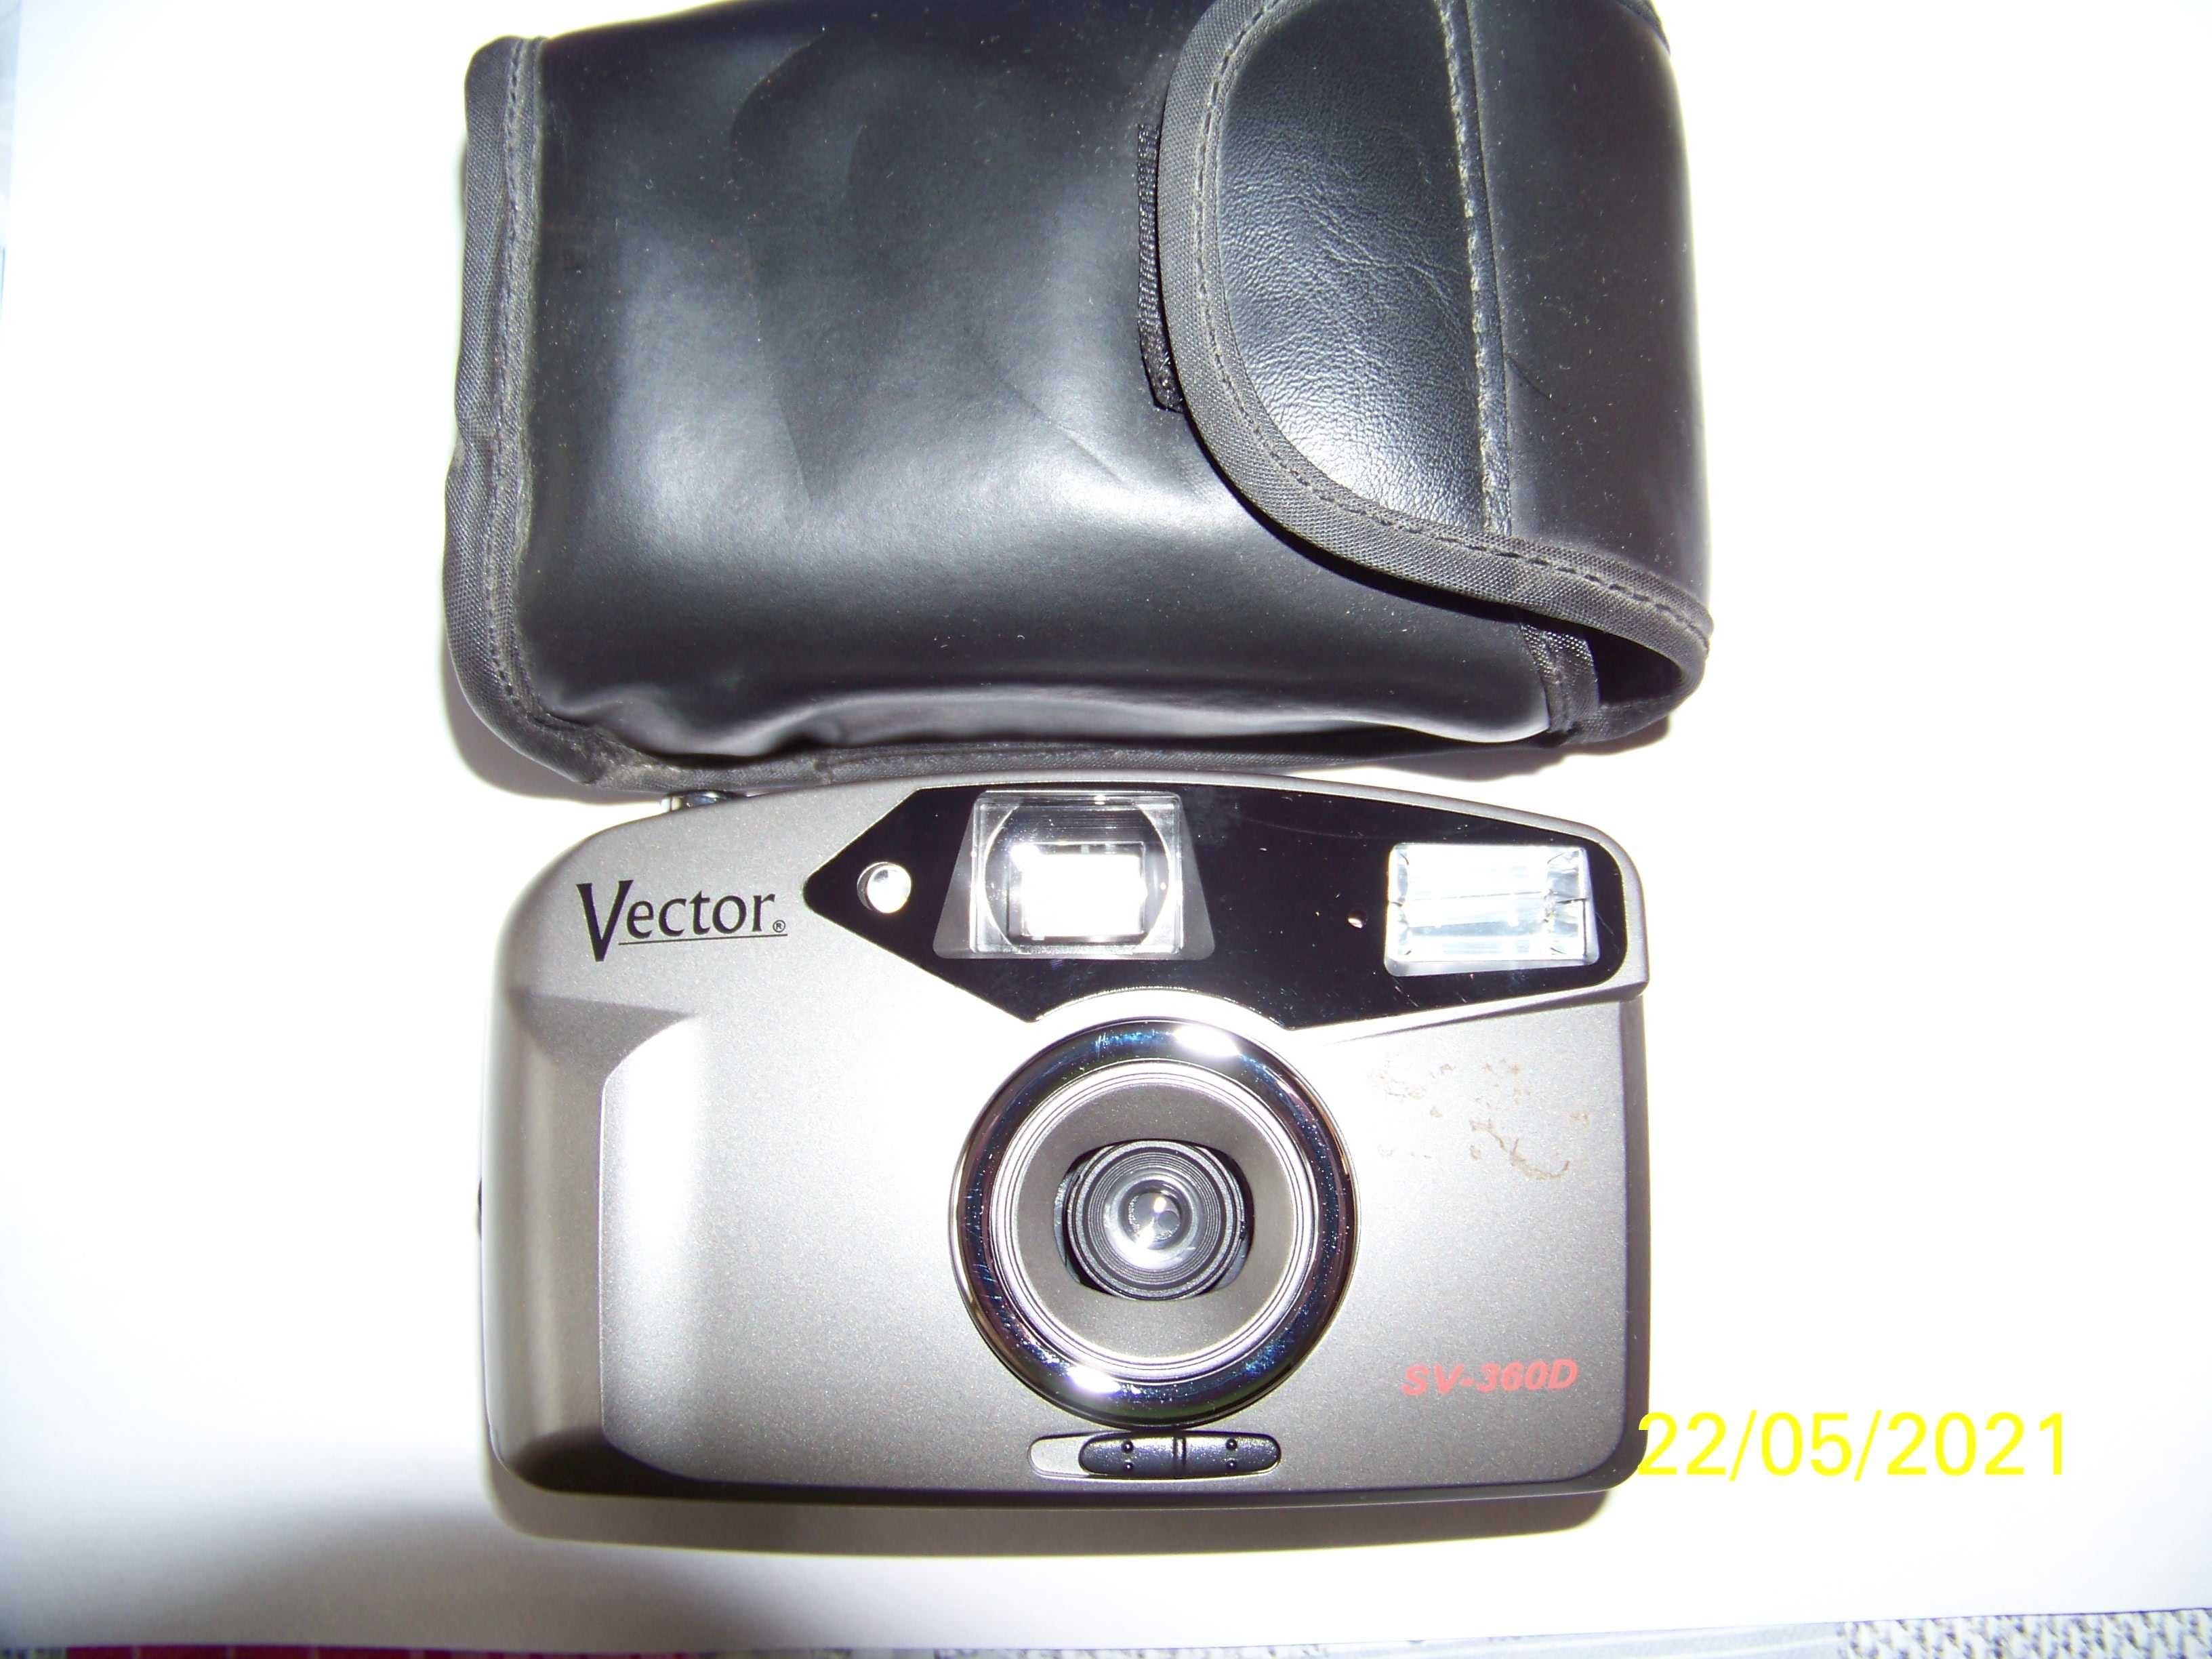 Aparat  fotograficzny Vector SV-360 D